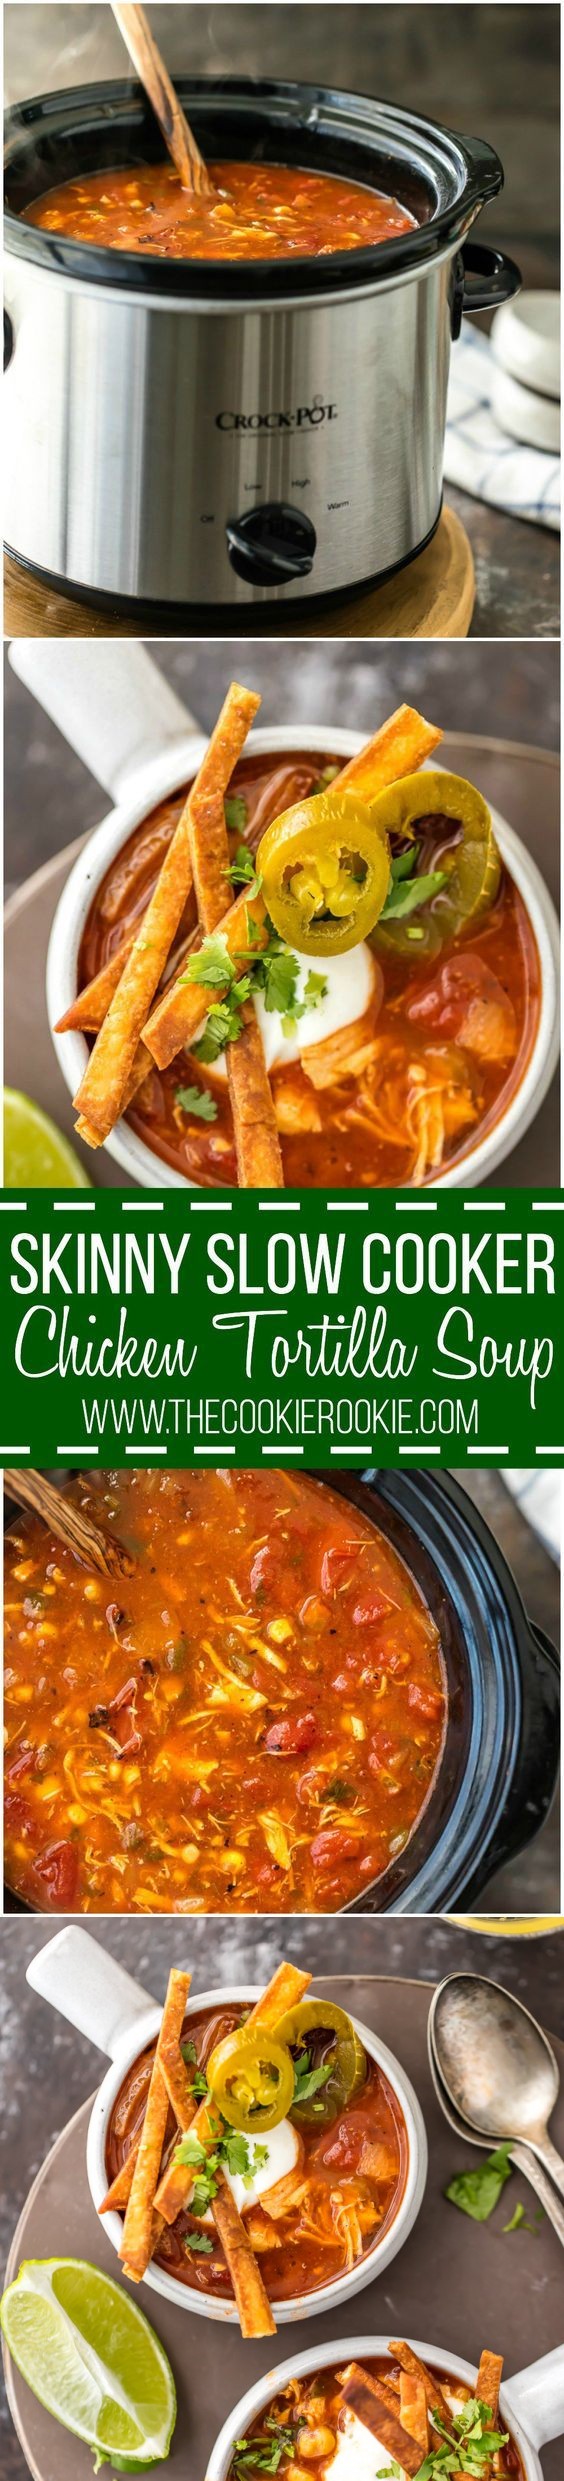 Skinny Slow Cooker Chicken Tortilla Soup